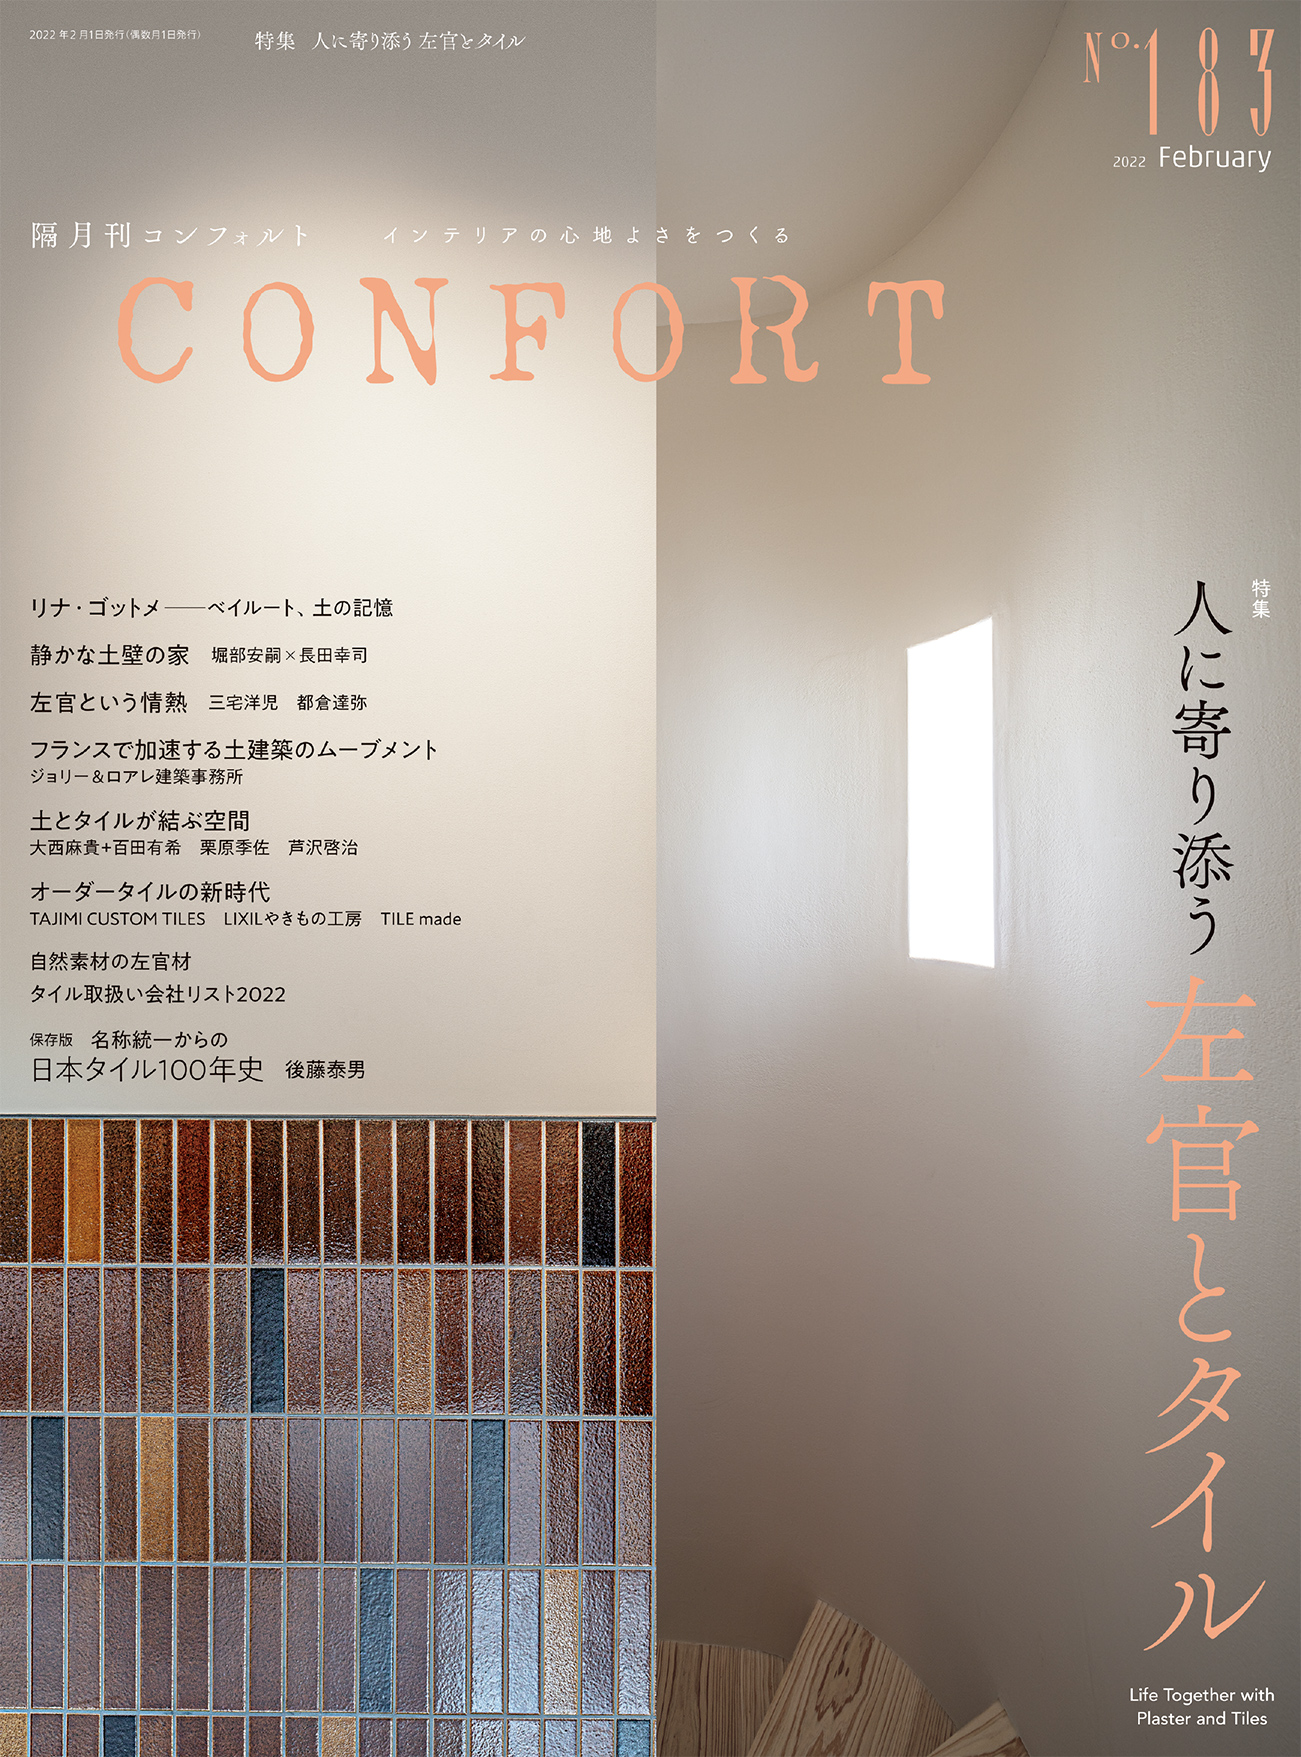 Confort 1号 の特集記事にて Tajimi Custom Tilesとエクシィズが紹介されました News Xs 株式会社エクシィズ